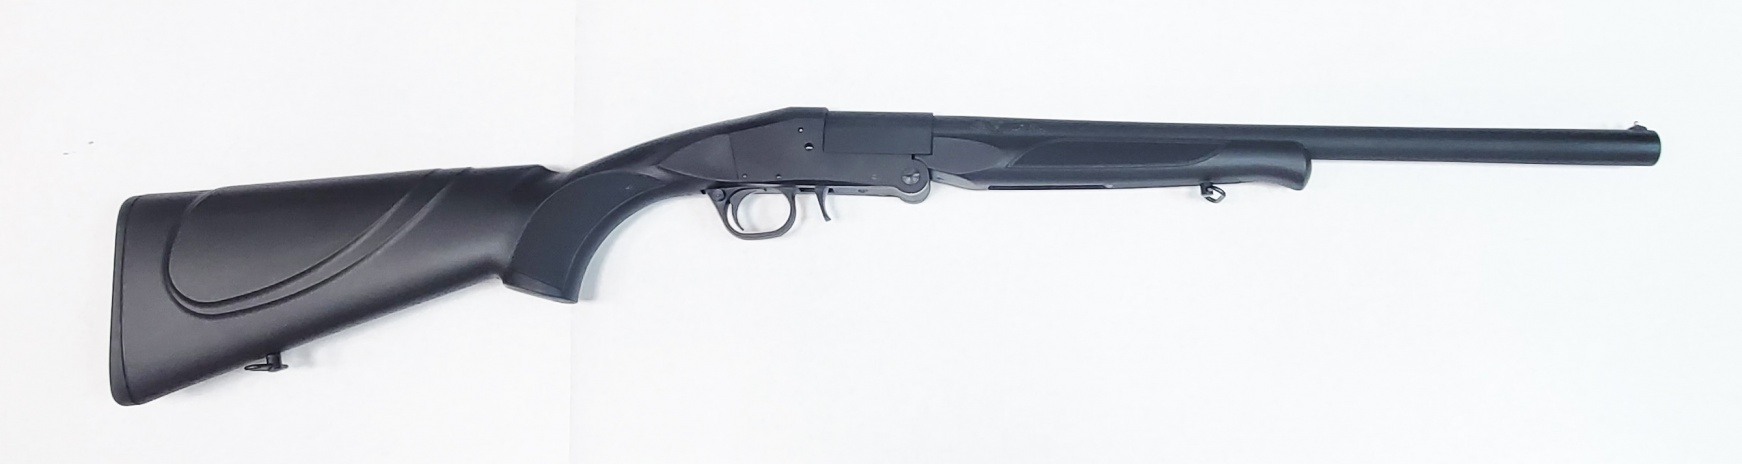 Гладкоствольные ружья MP-155 20 калибра